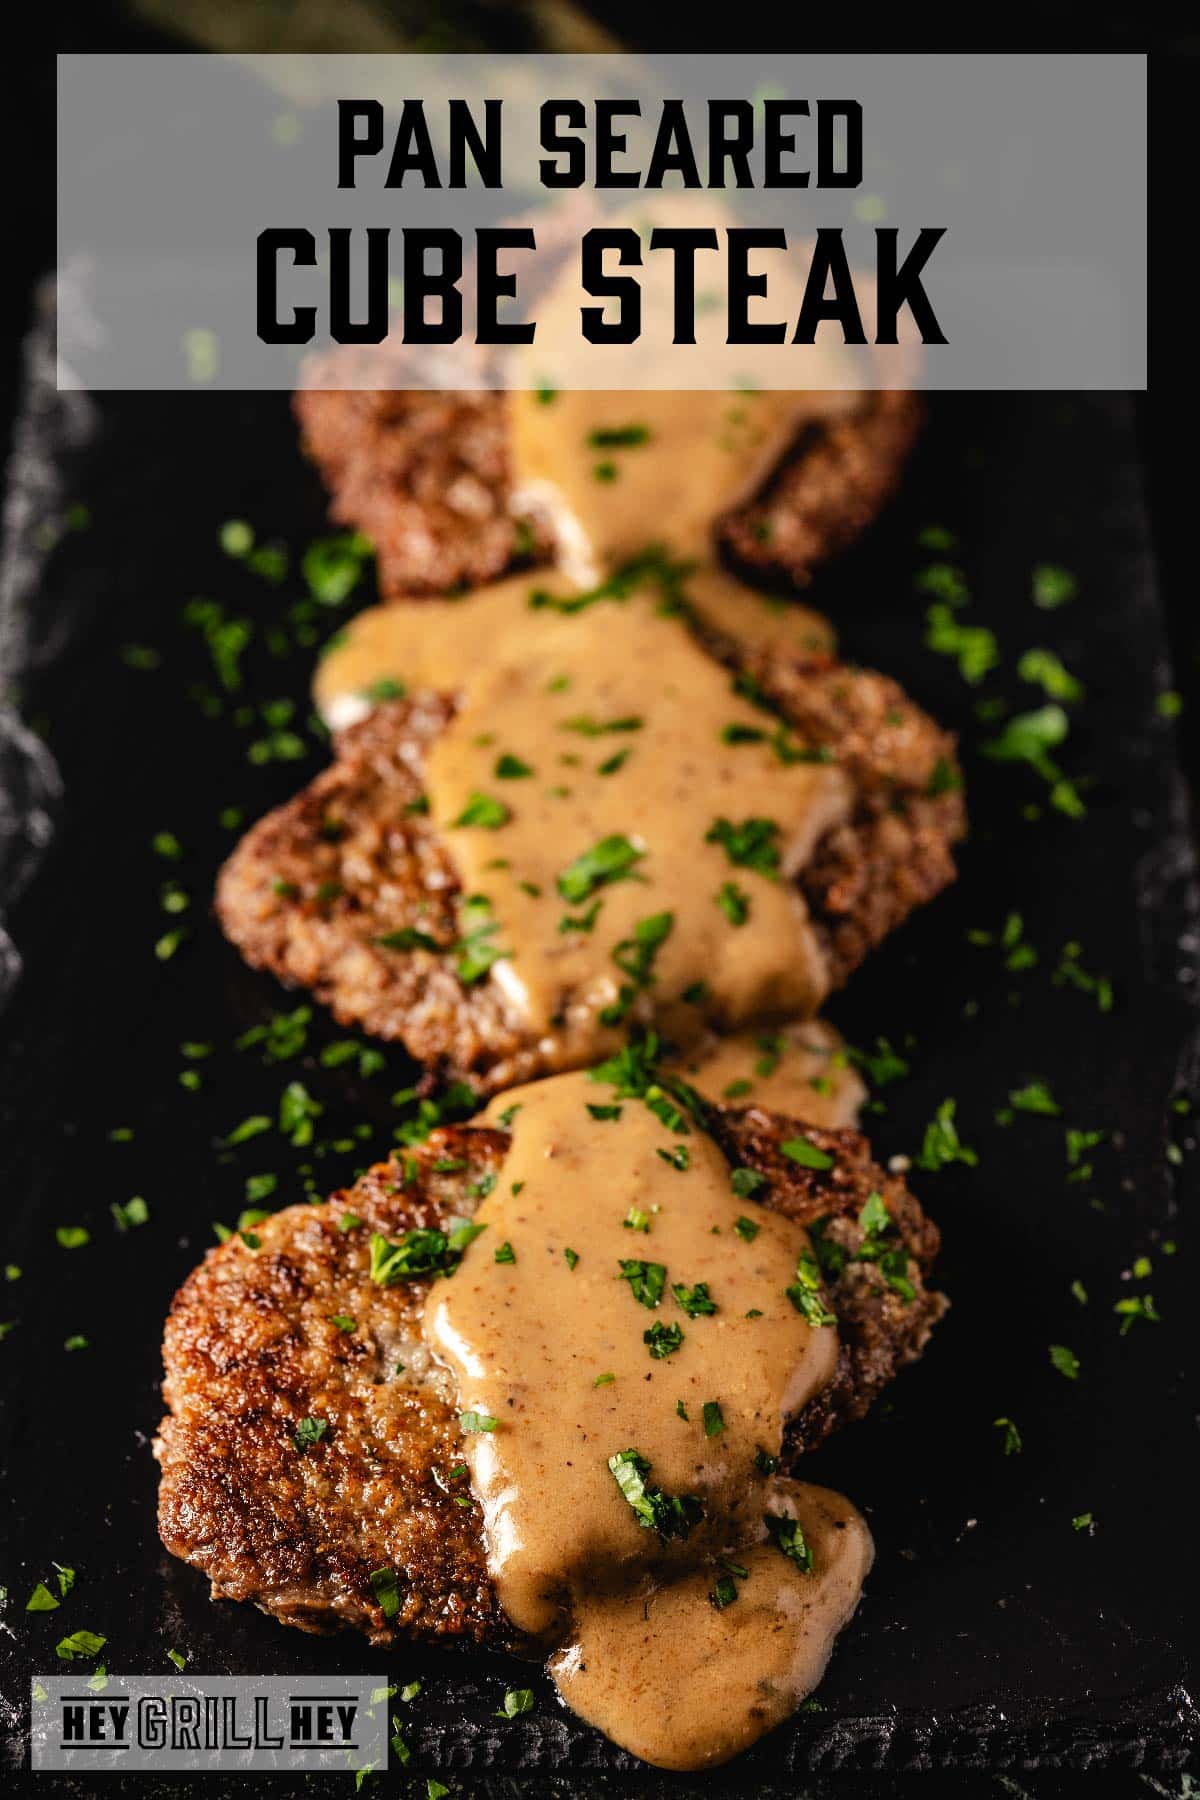 Cube steaks coated in gravy on serving platter. Text reads "Pan Seared Cube Steak".